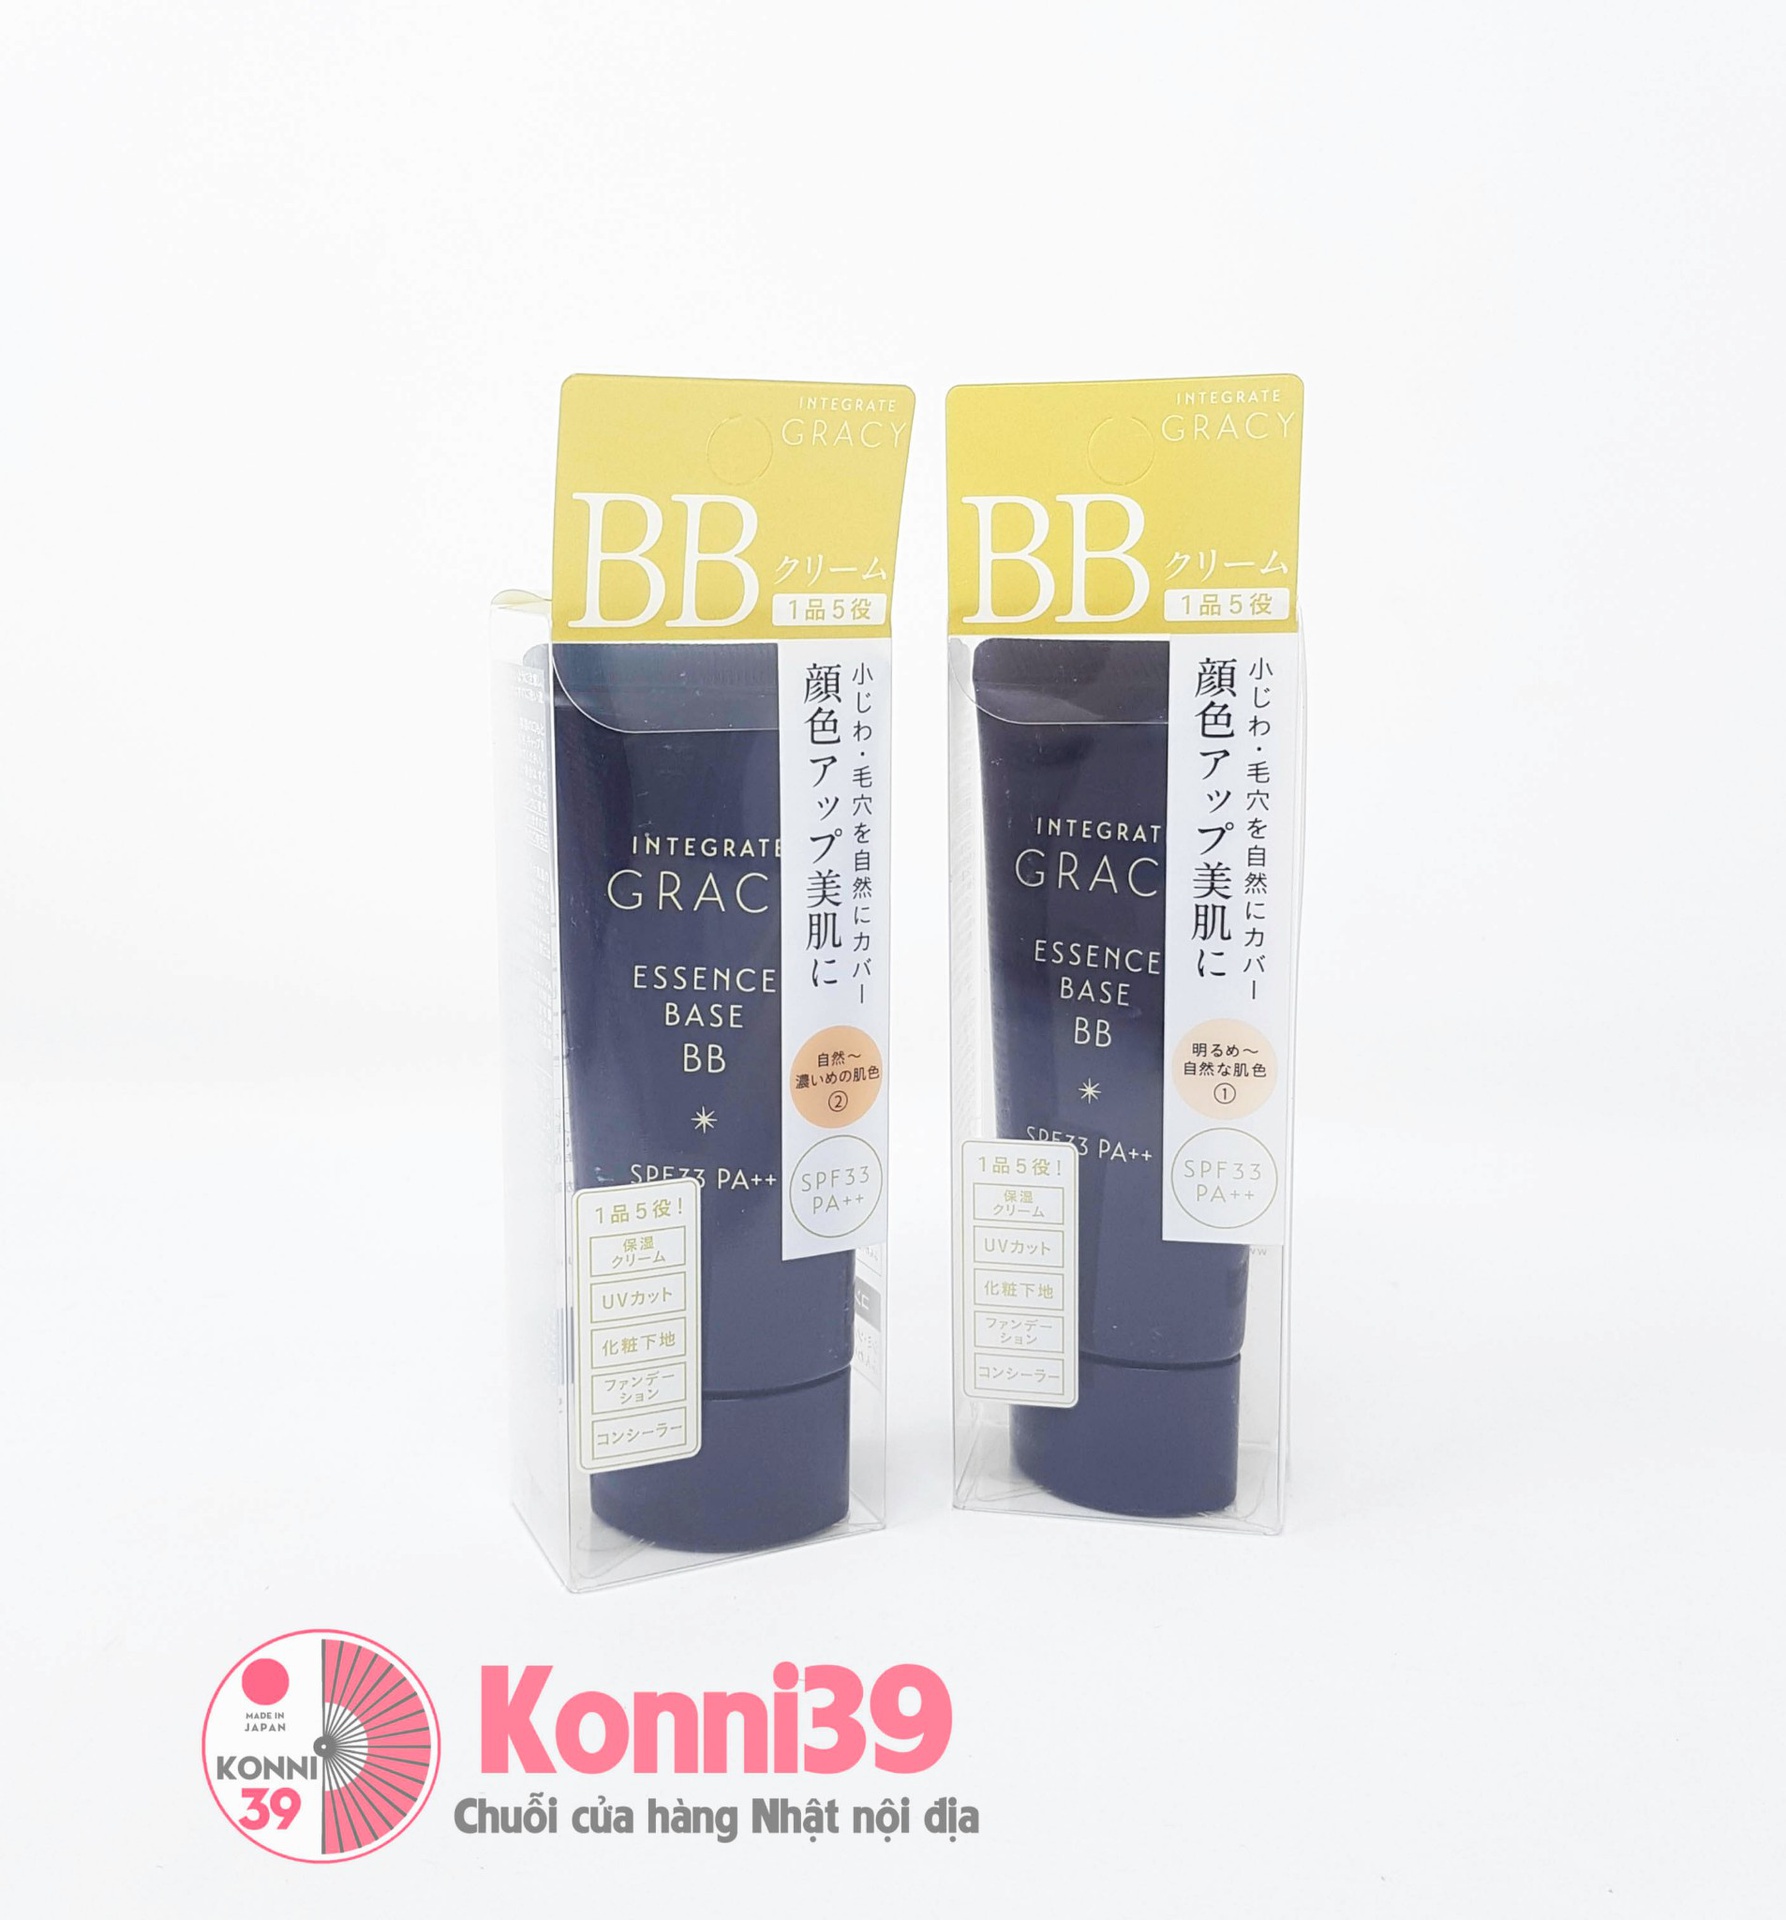 Kem nền BB Cream Shiseido Integrate gracy 40g SPF 33+ 5 trong 1 (2 màu)